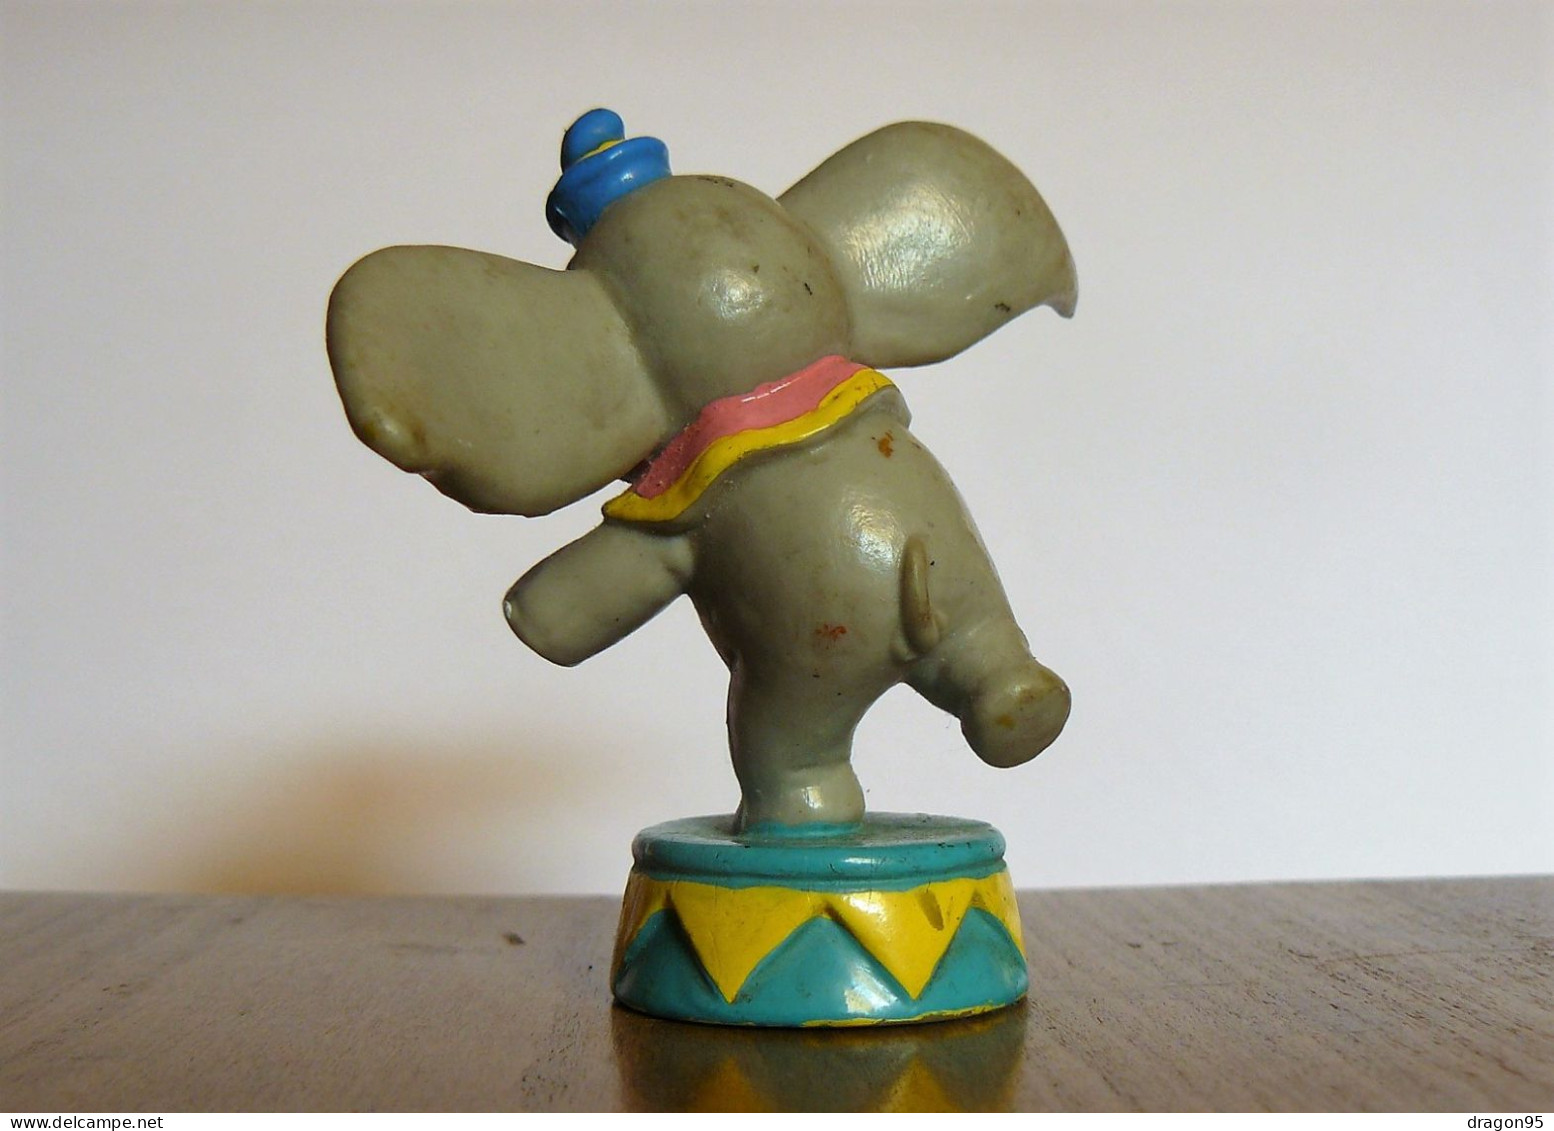 Figurine Dumbo Vintage Peinte à La Main - Bully - Walt Disney - Disney